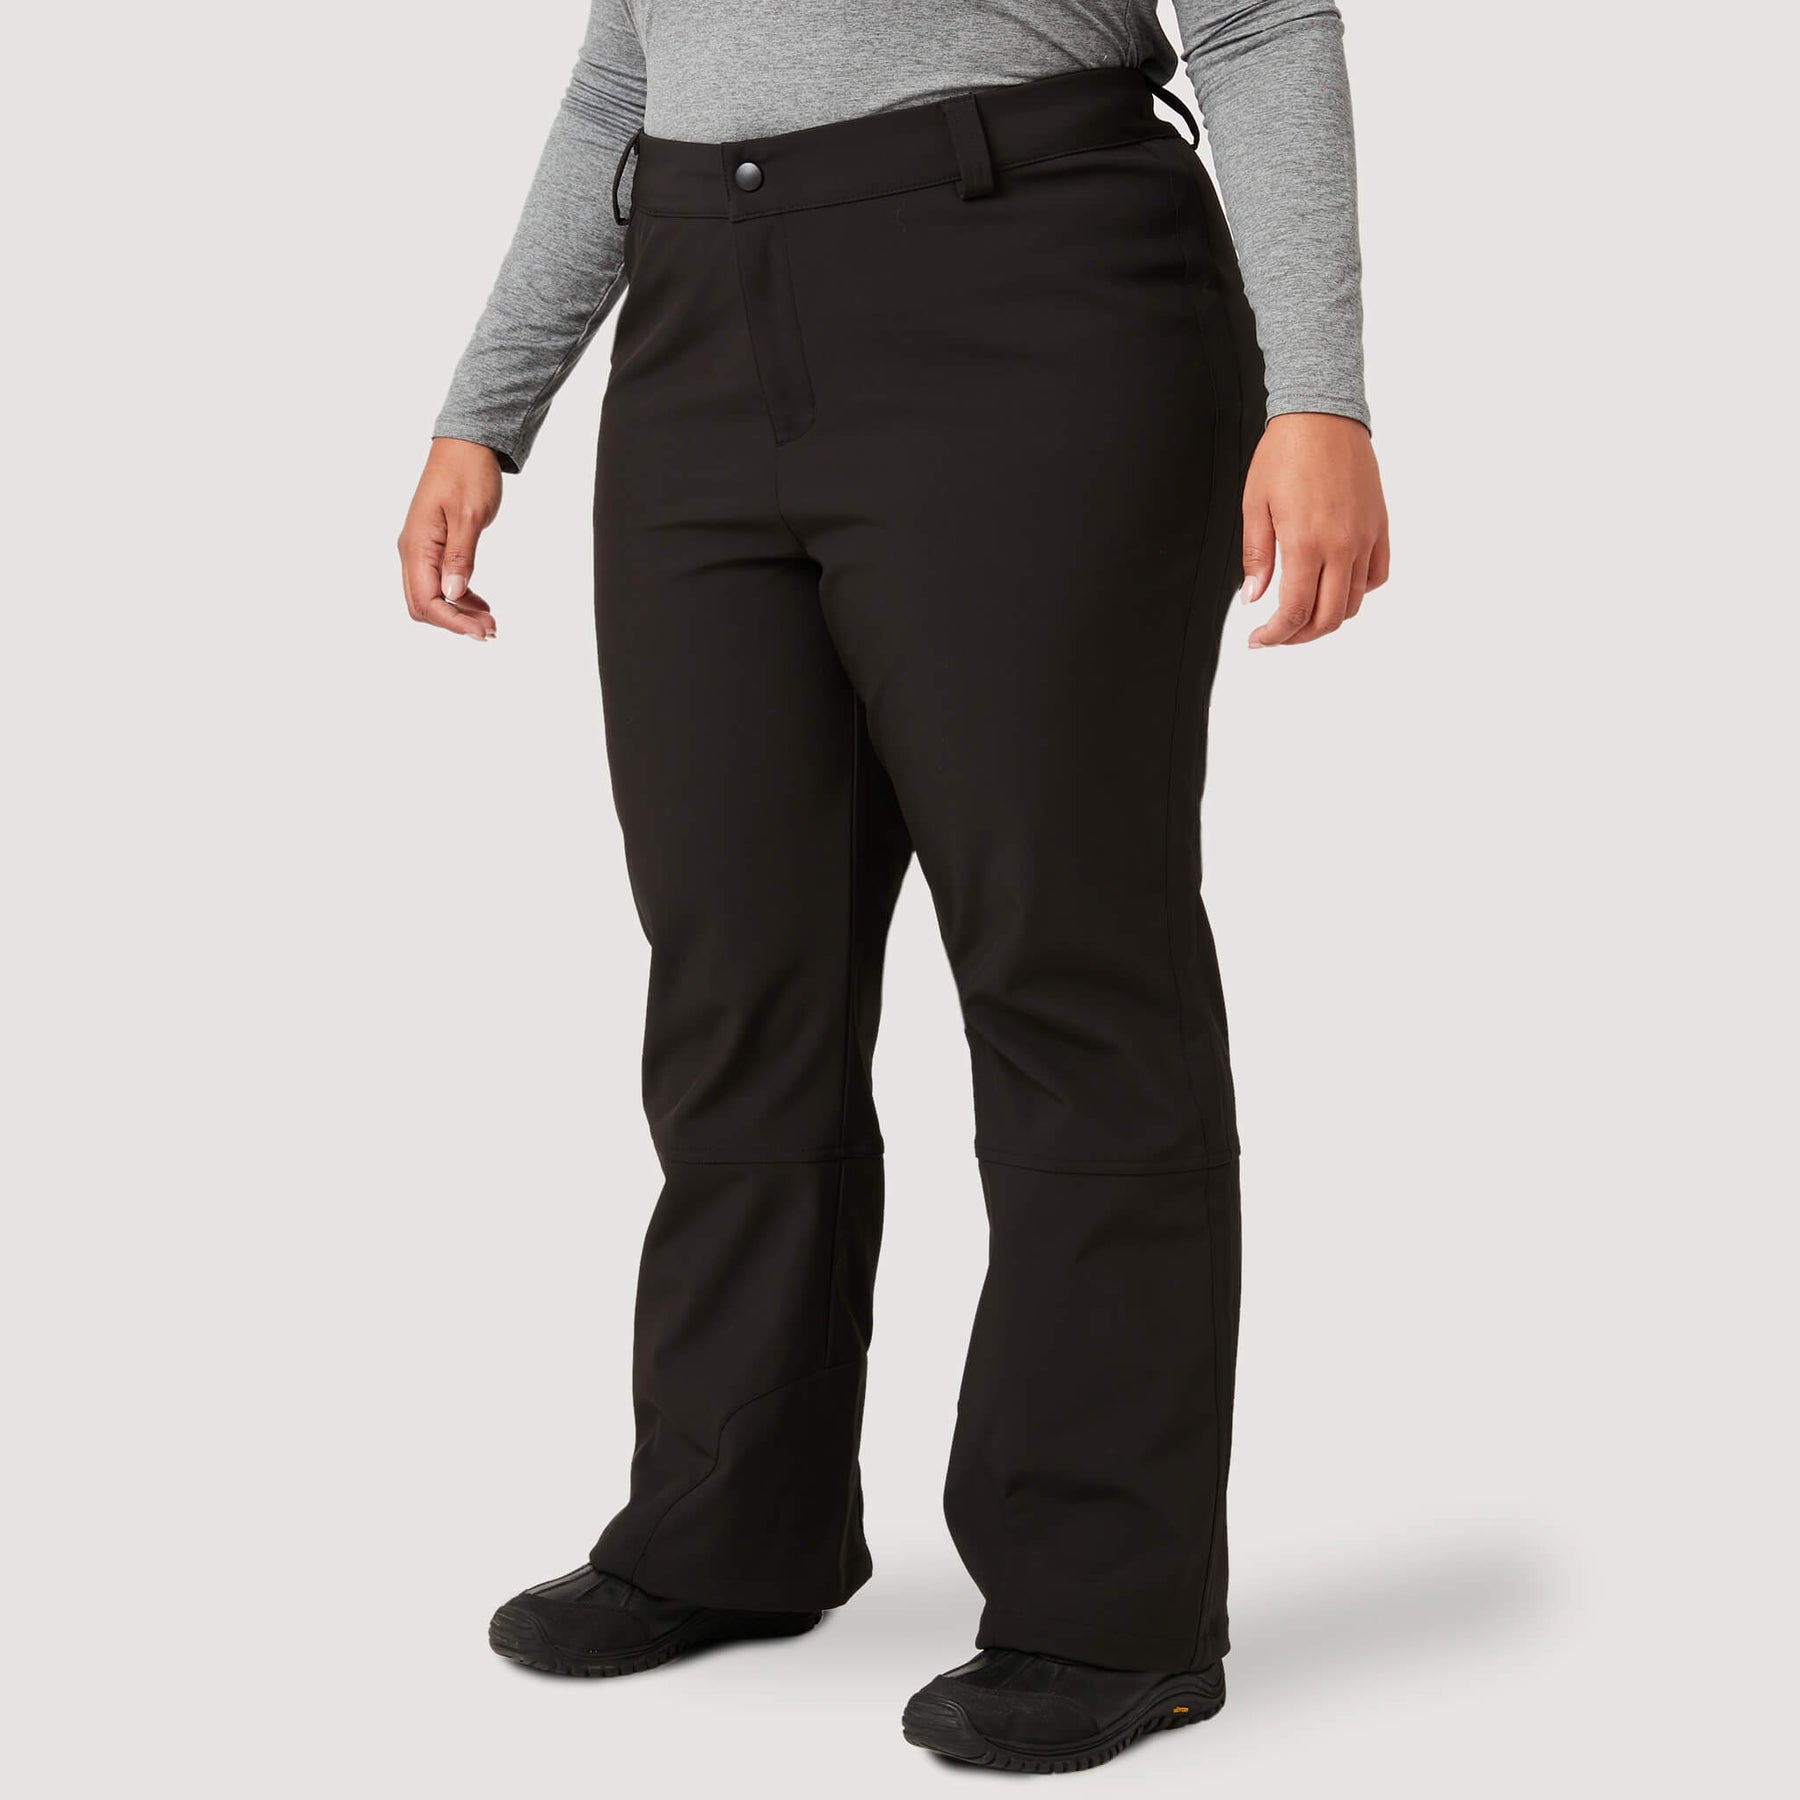 Carverace snow pants ski pants, soft shell pants women's size 38 L30, mint  condi